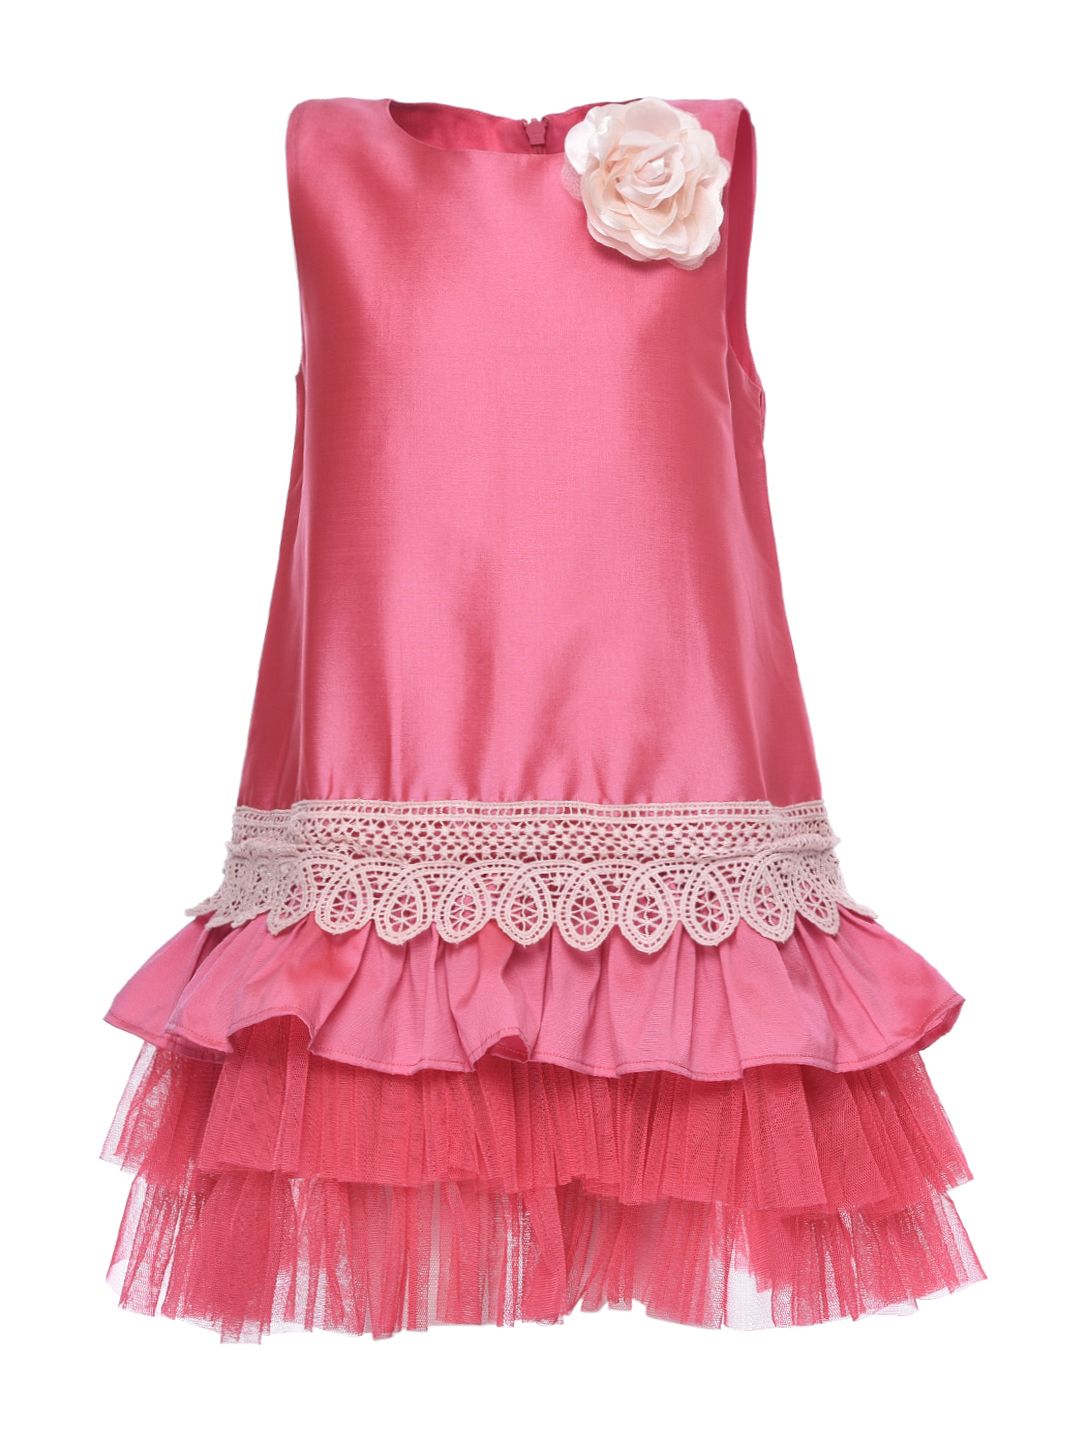 Lace Rose Dress